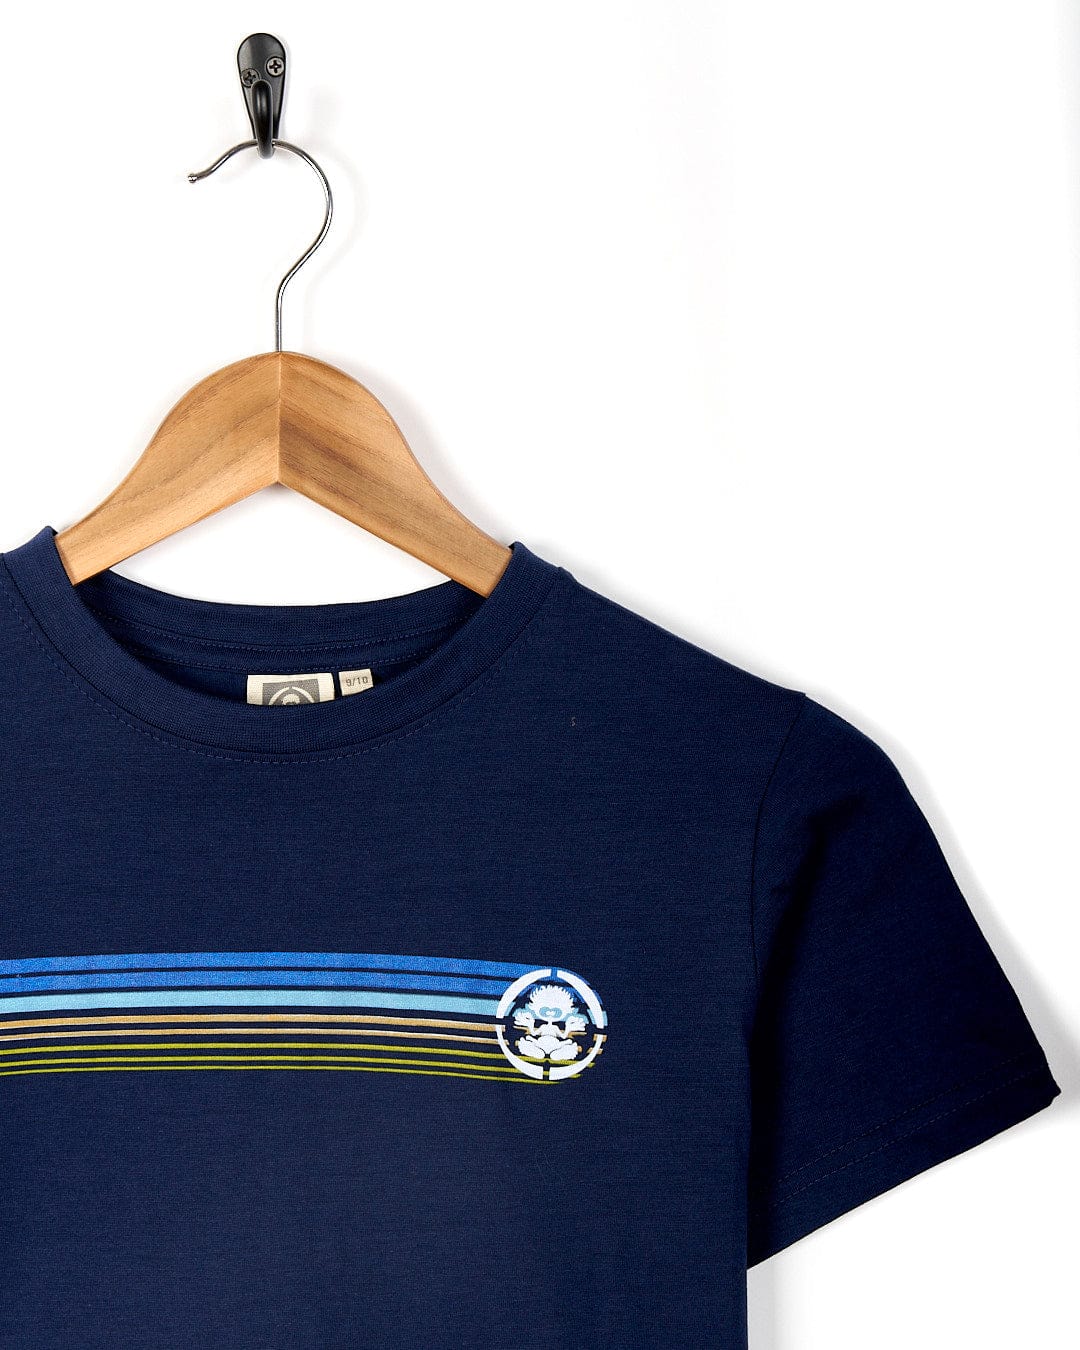 Saltrock Tok Stripe - Kids Short Sleeve T-Shirt - Dark Blue, hanging on a wooden hanger against a white background.